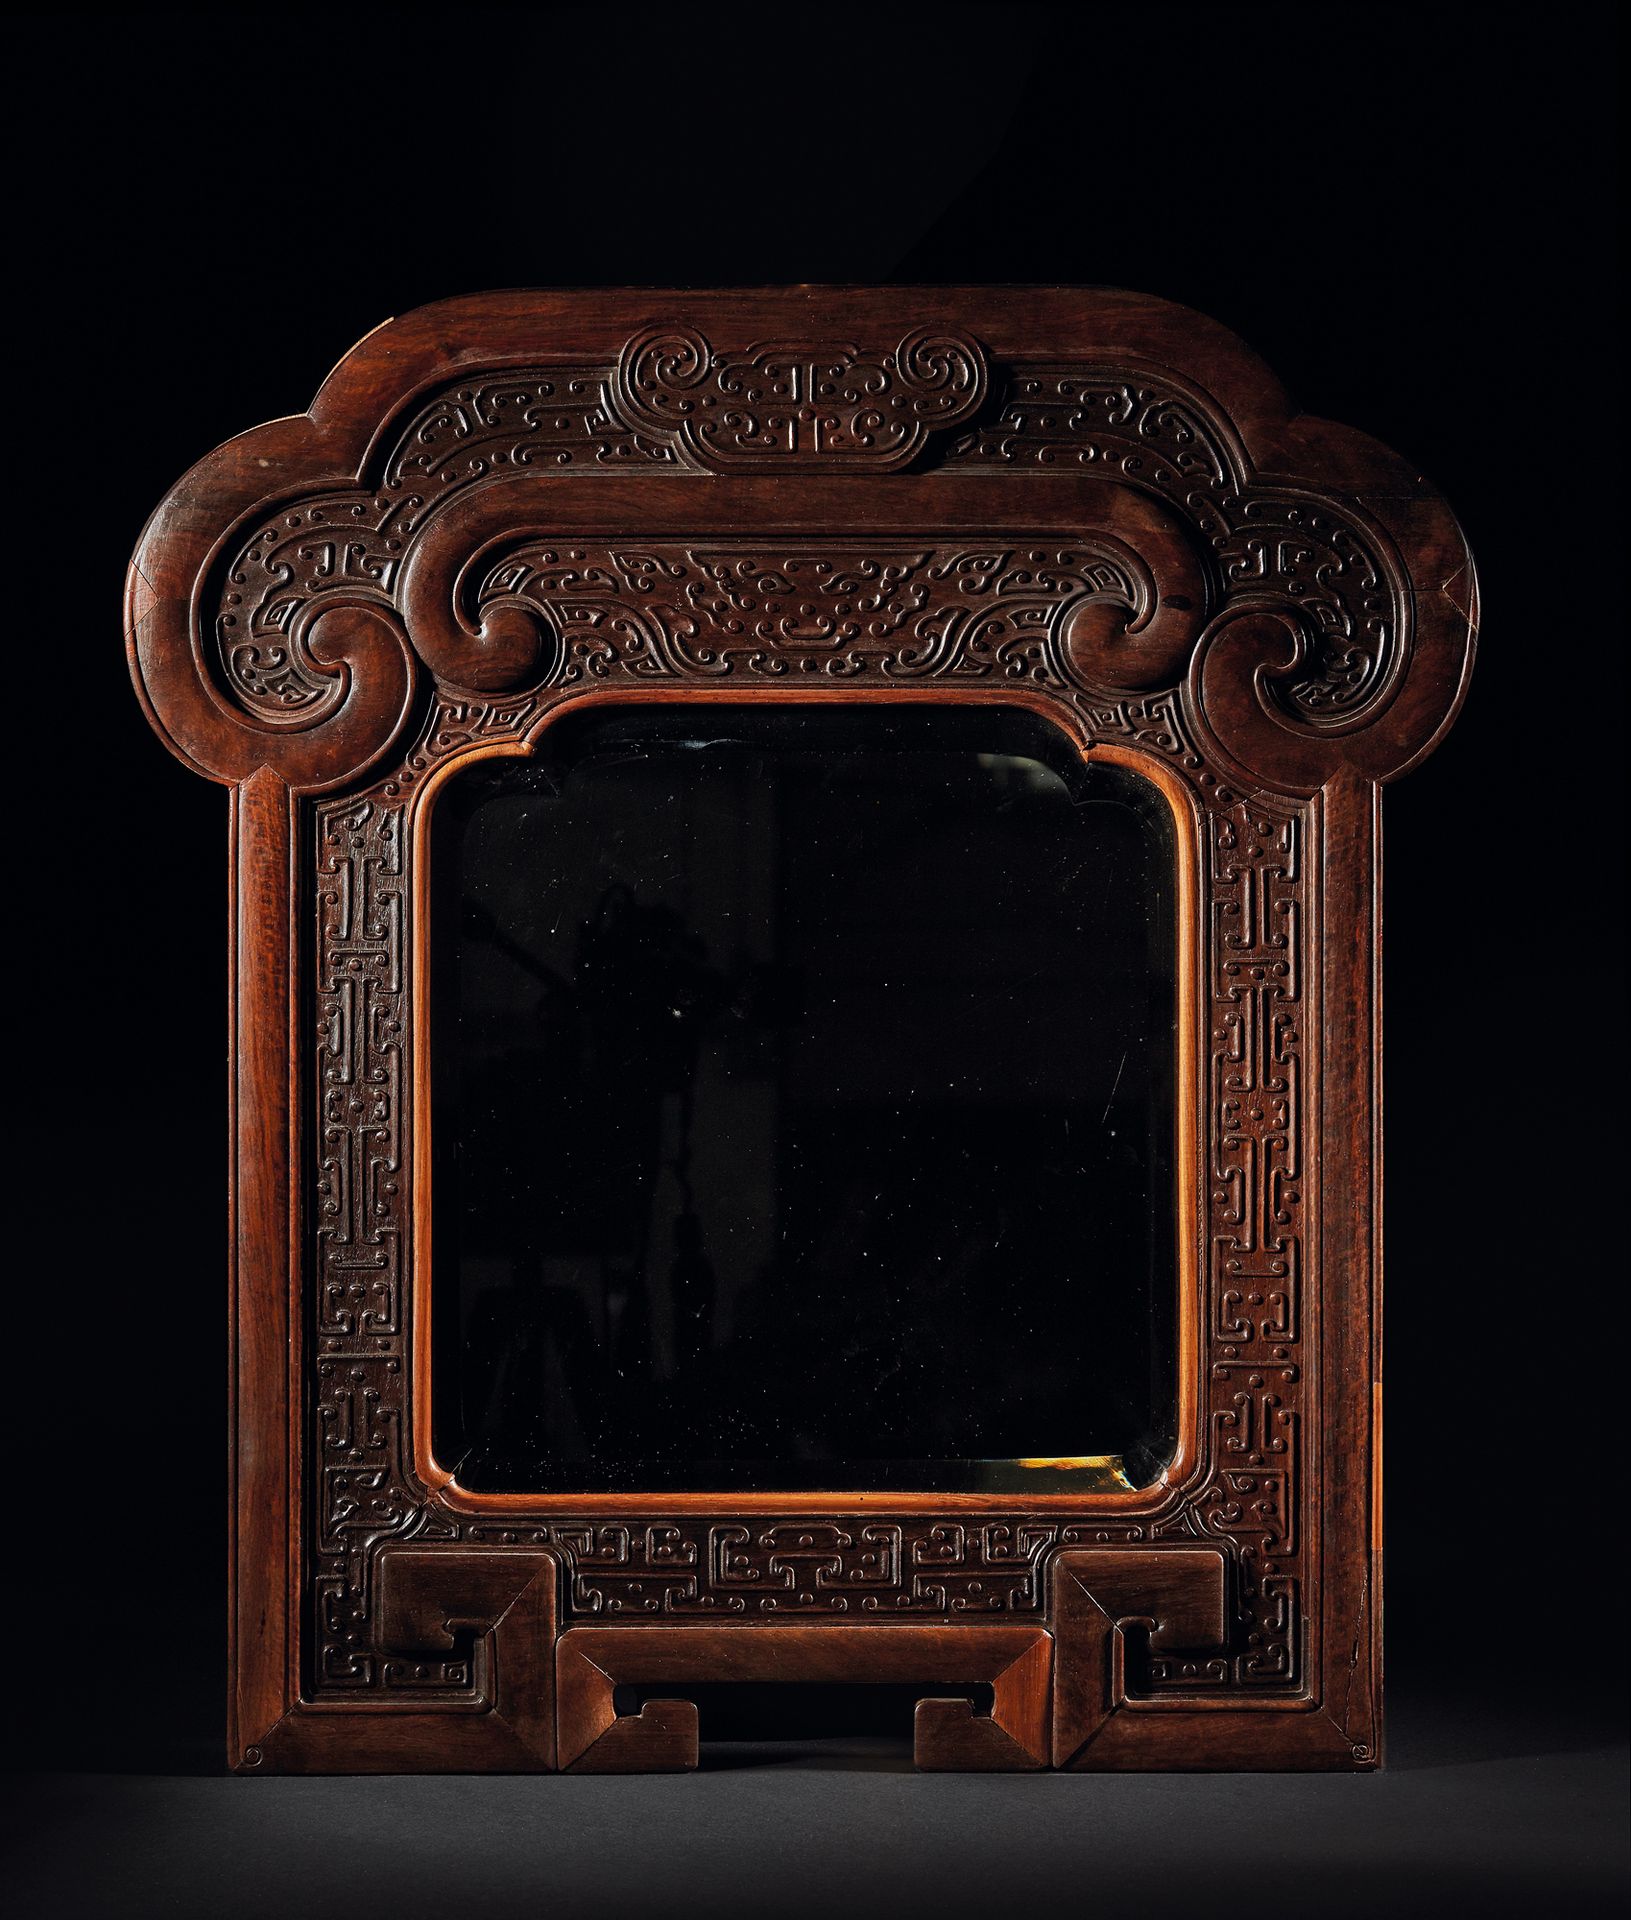 CHINE - XVIIIe/XIXe siècle 黄花梨和红木框架的镜子，雕刻着希腊的门楣和饕餮面具，上部是如意头的形状。
尺寸为66.5 x 61厘米。